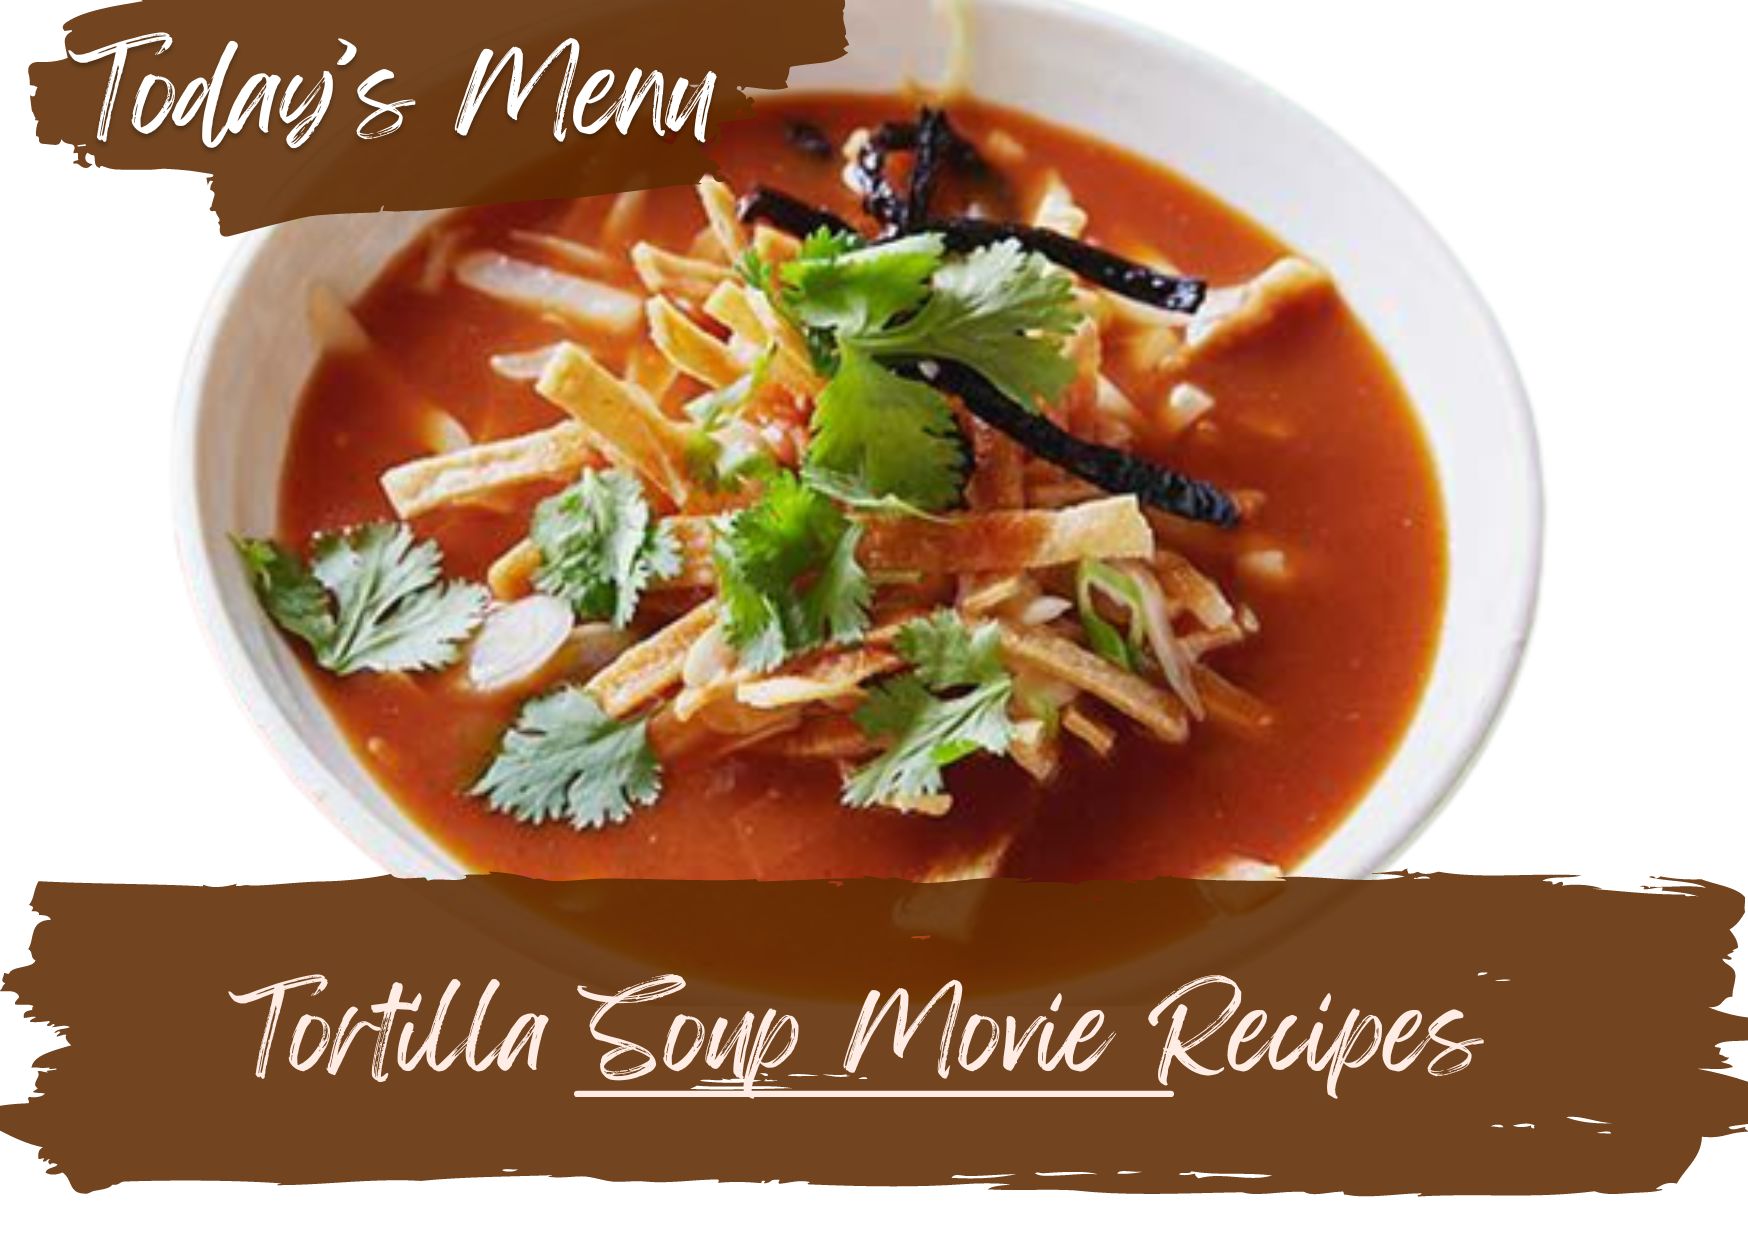 Tortilla Soup Movie Recipes